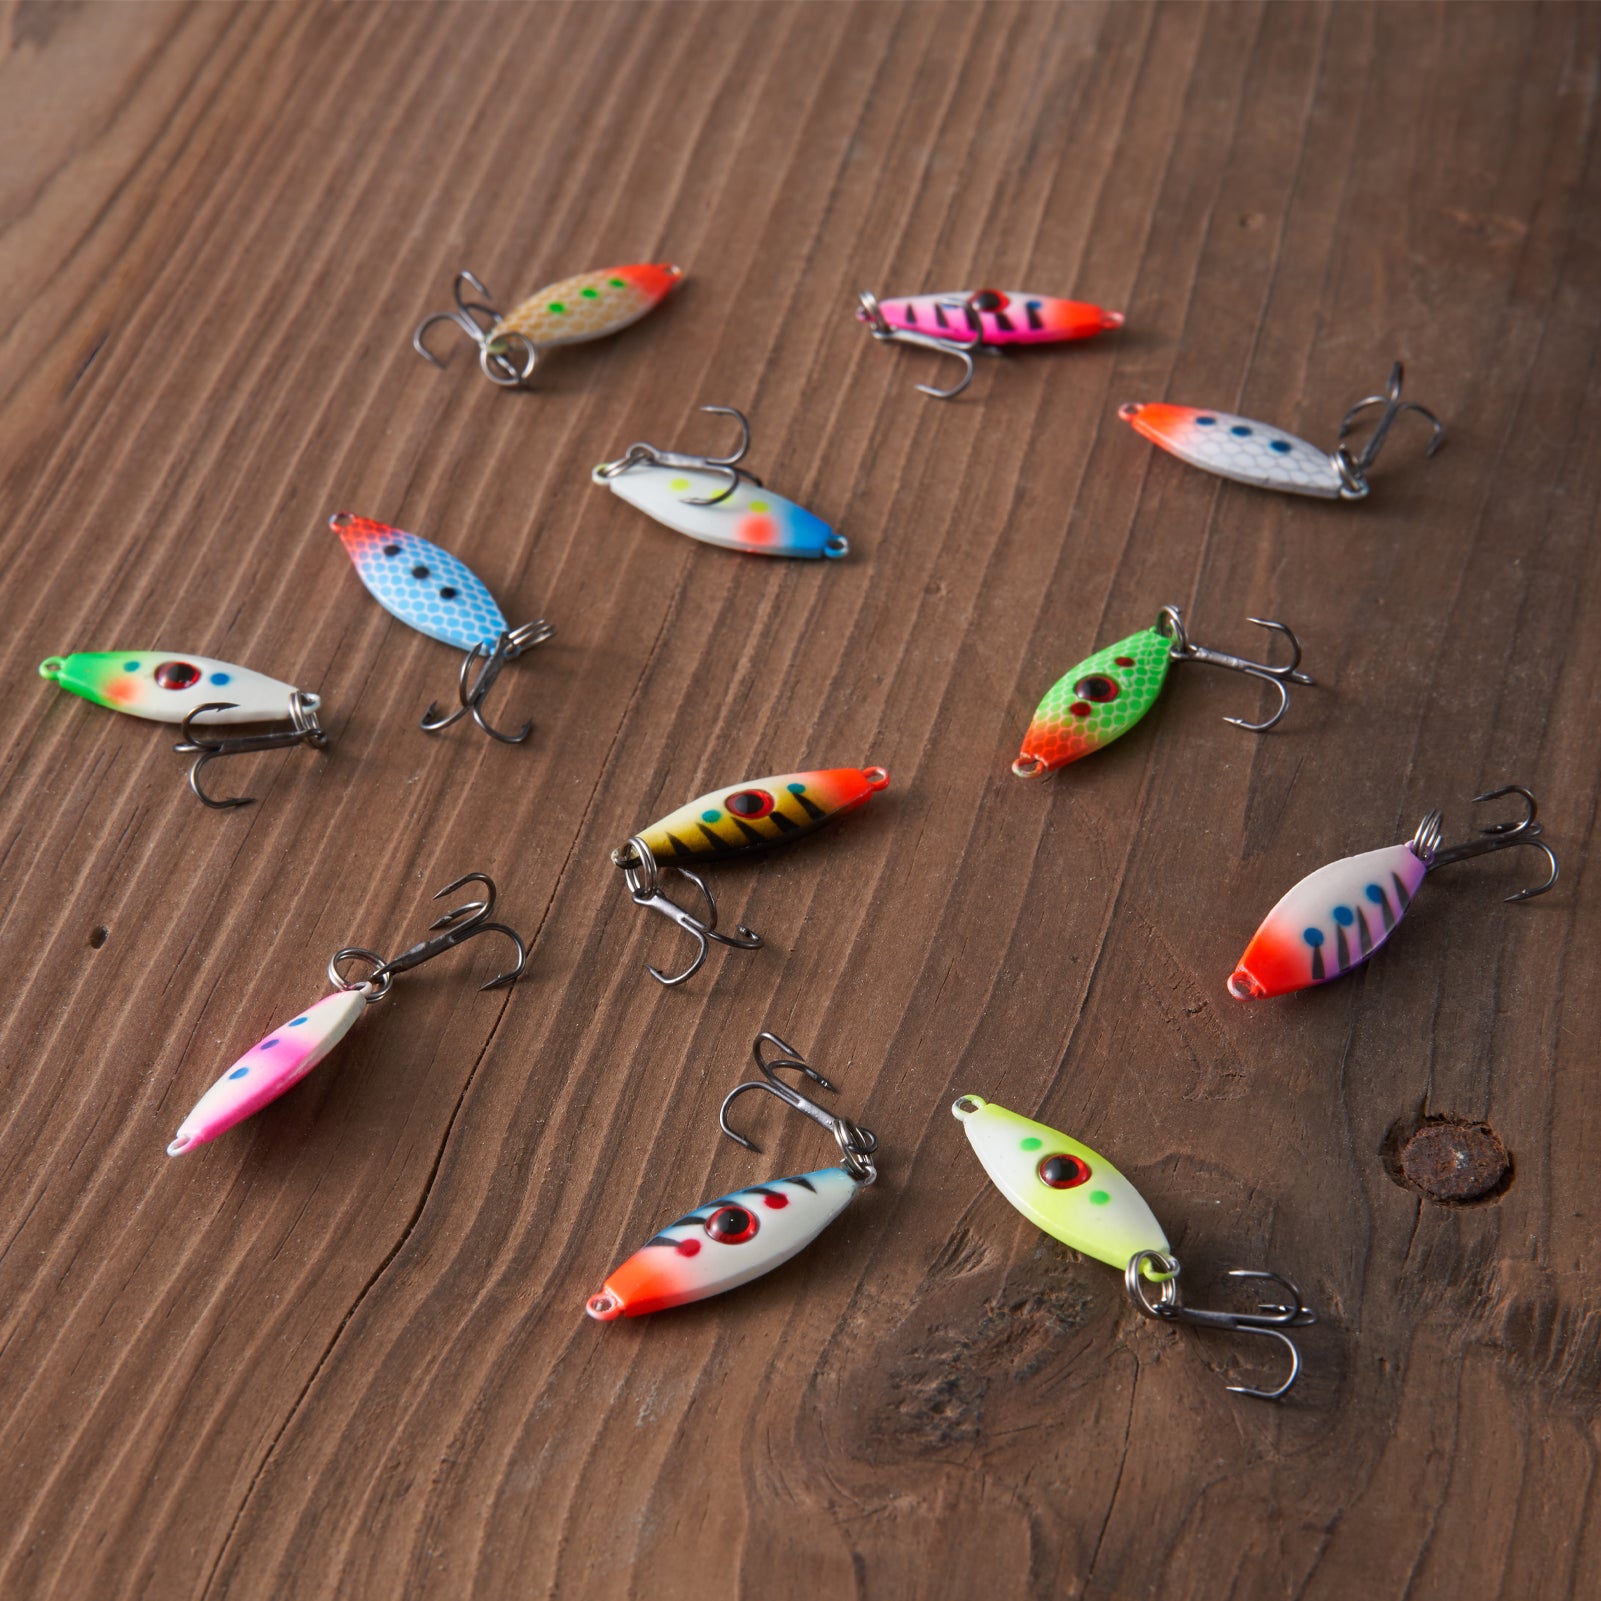 Dovesun Ice Fishing Jigs Kit, Ice Fishing Lures Glow in The Dark Jig Heads  | Soft Baits Fishing Hooks Walleye Crappie Jig Set 20Pcs / 93Pcs